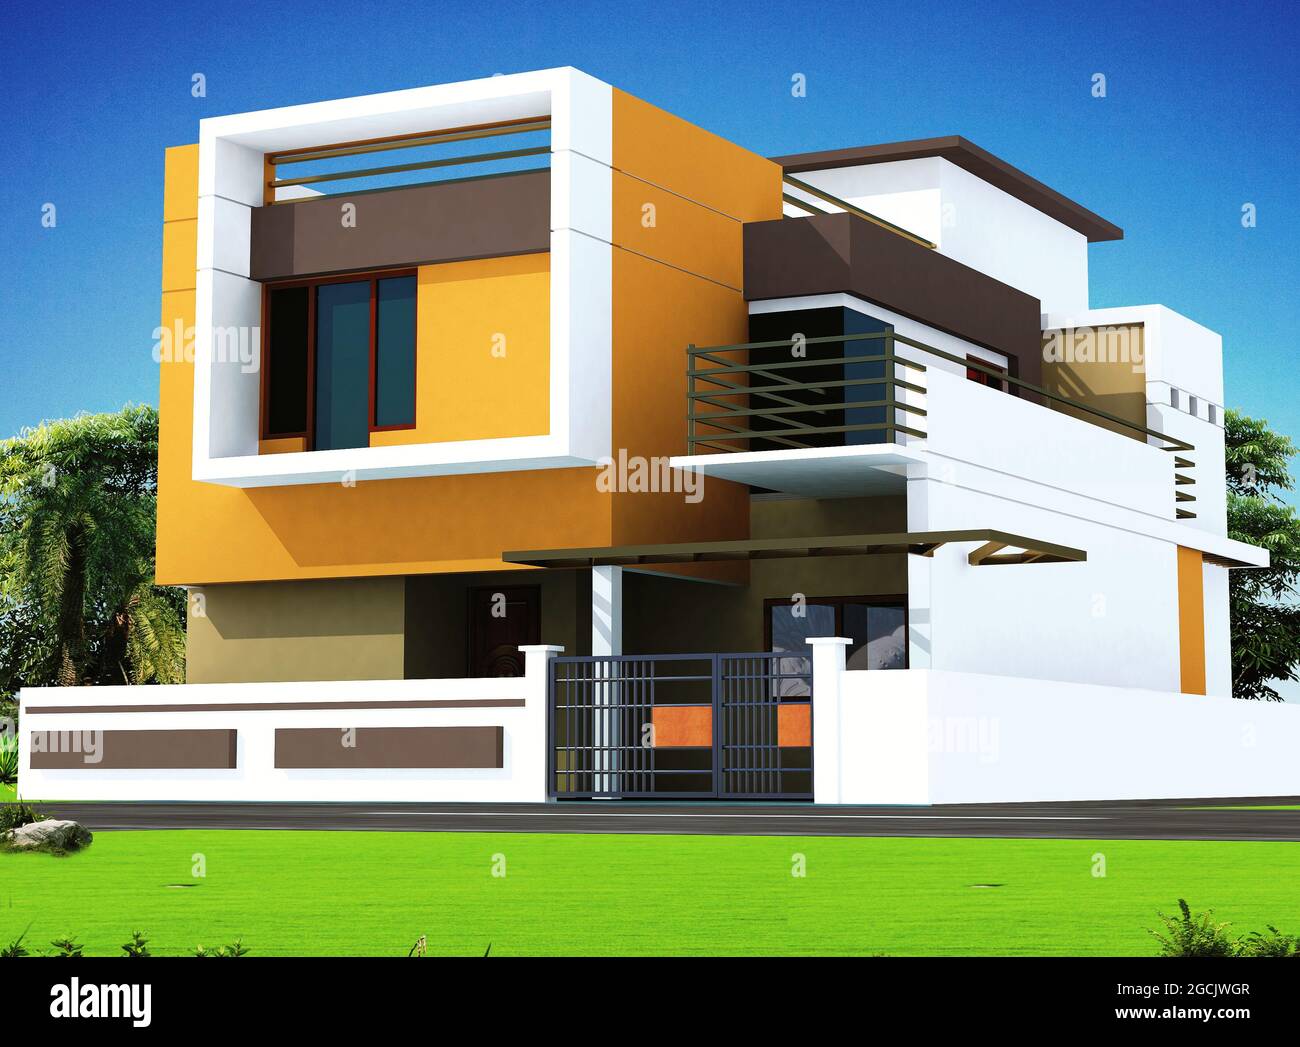 3D rendering of a duplex house exterior design with orange color ...